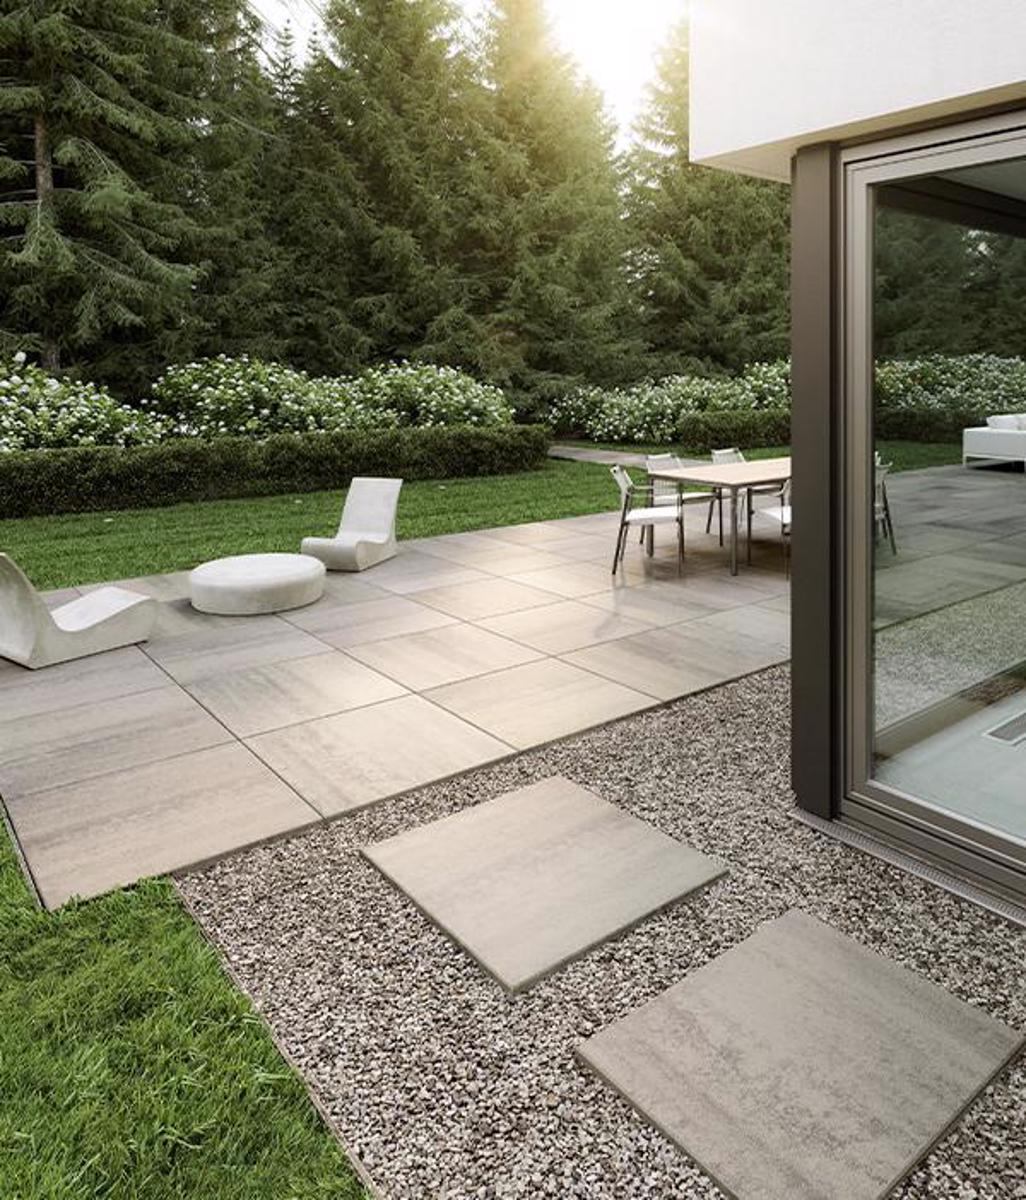 Techo bloc by style backyard patio walkway large slabs grey modern 4